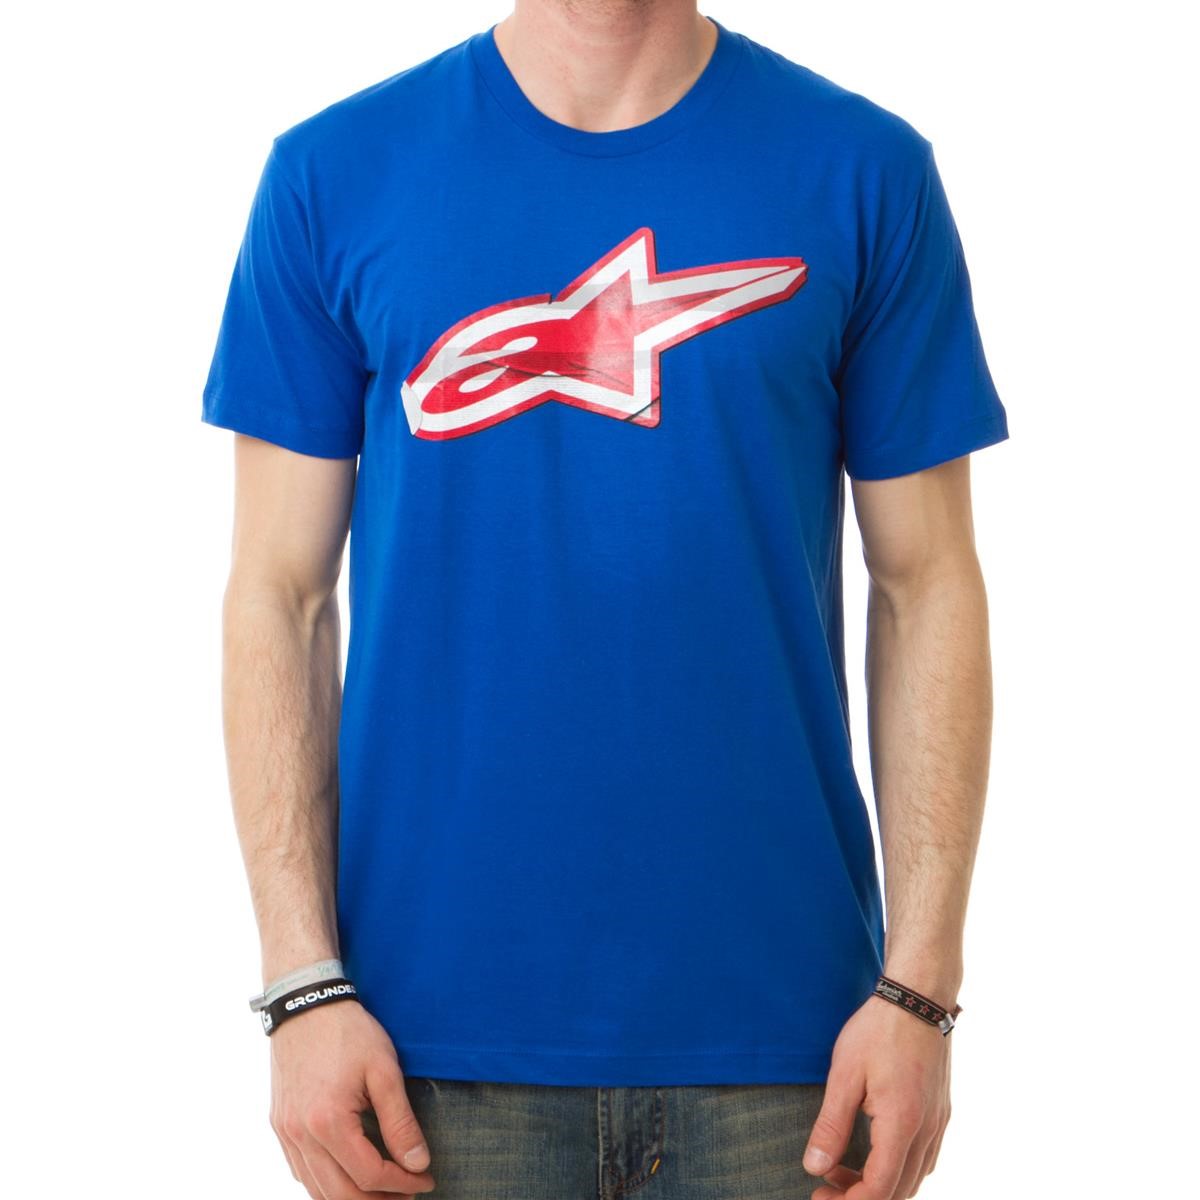 Freizeit/Streetwear Bekleidung-T-Shirts/Polos - Alpinestars T-Shirt Sticky Royal Blue